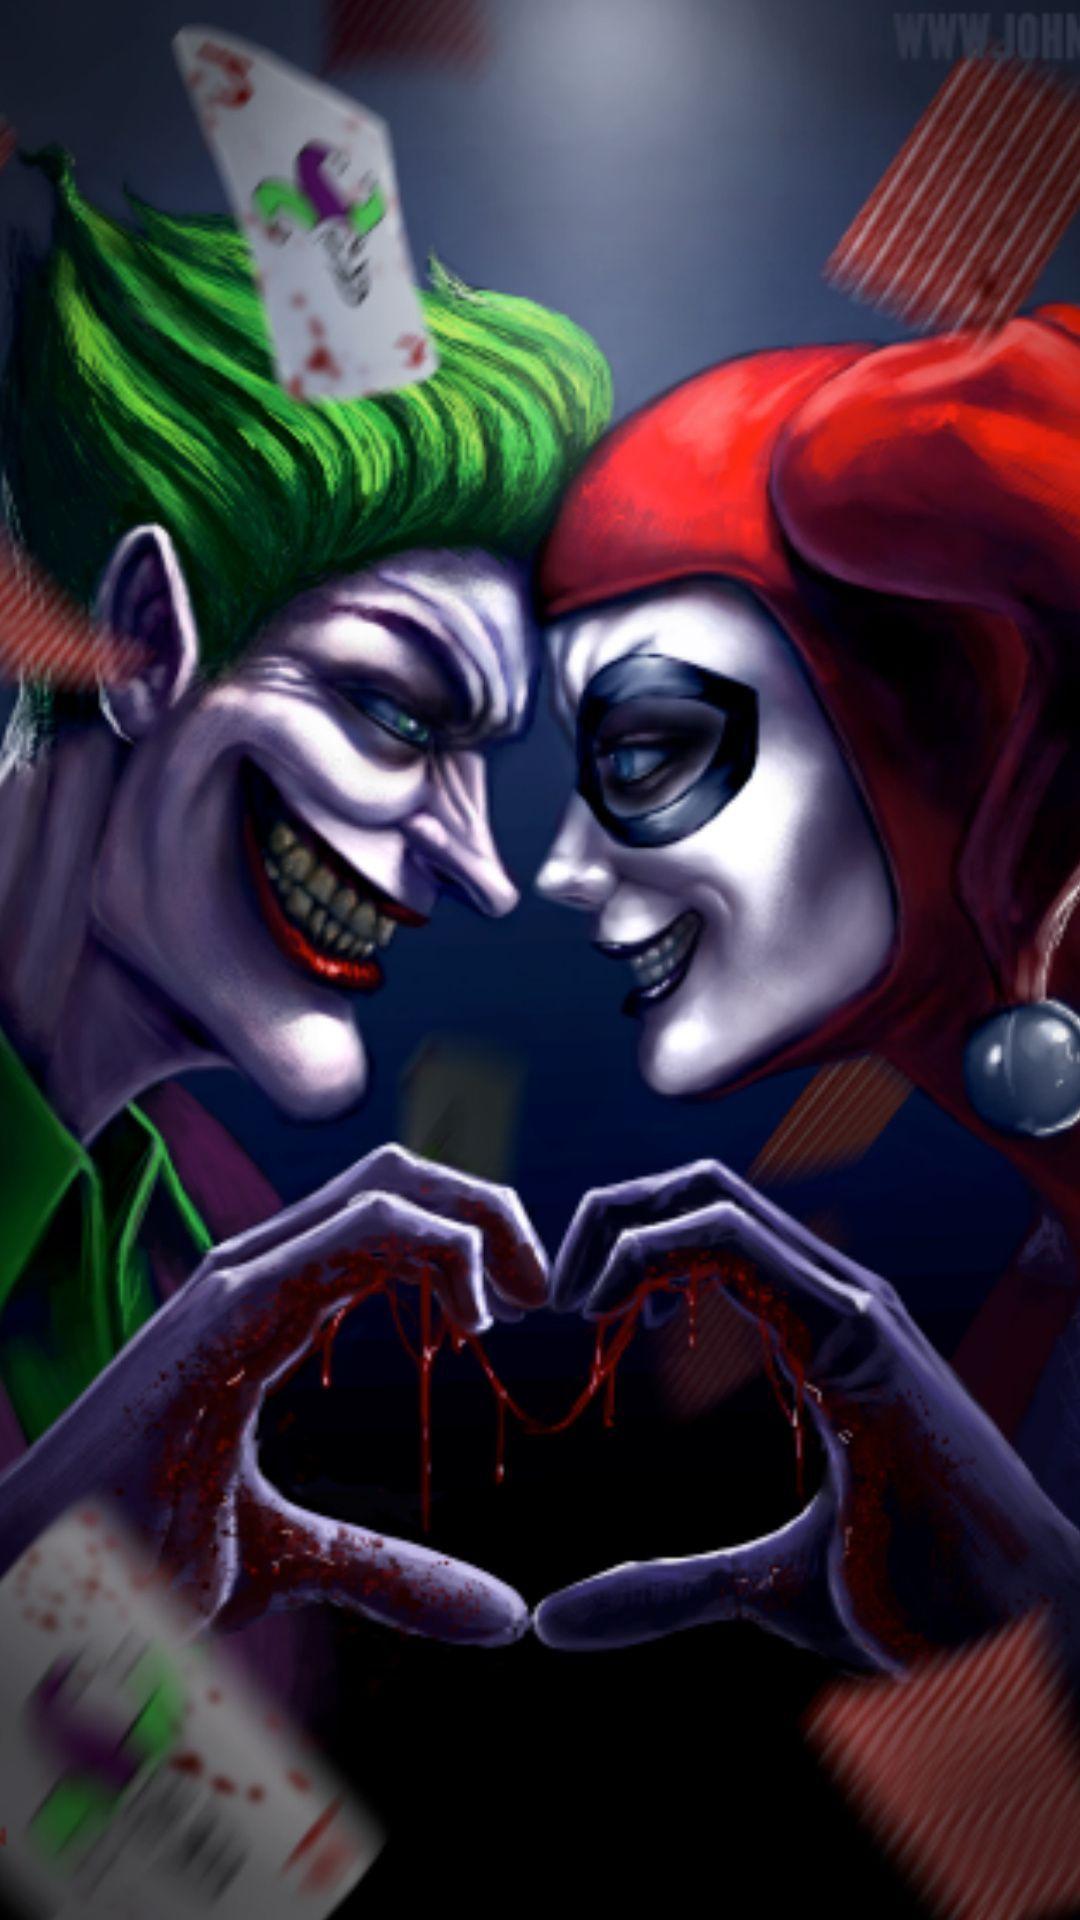 Joker Wallpaper For iPhone. Best Games Wallpaper